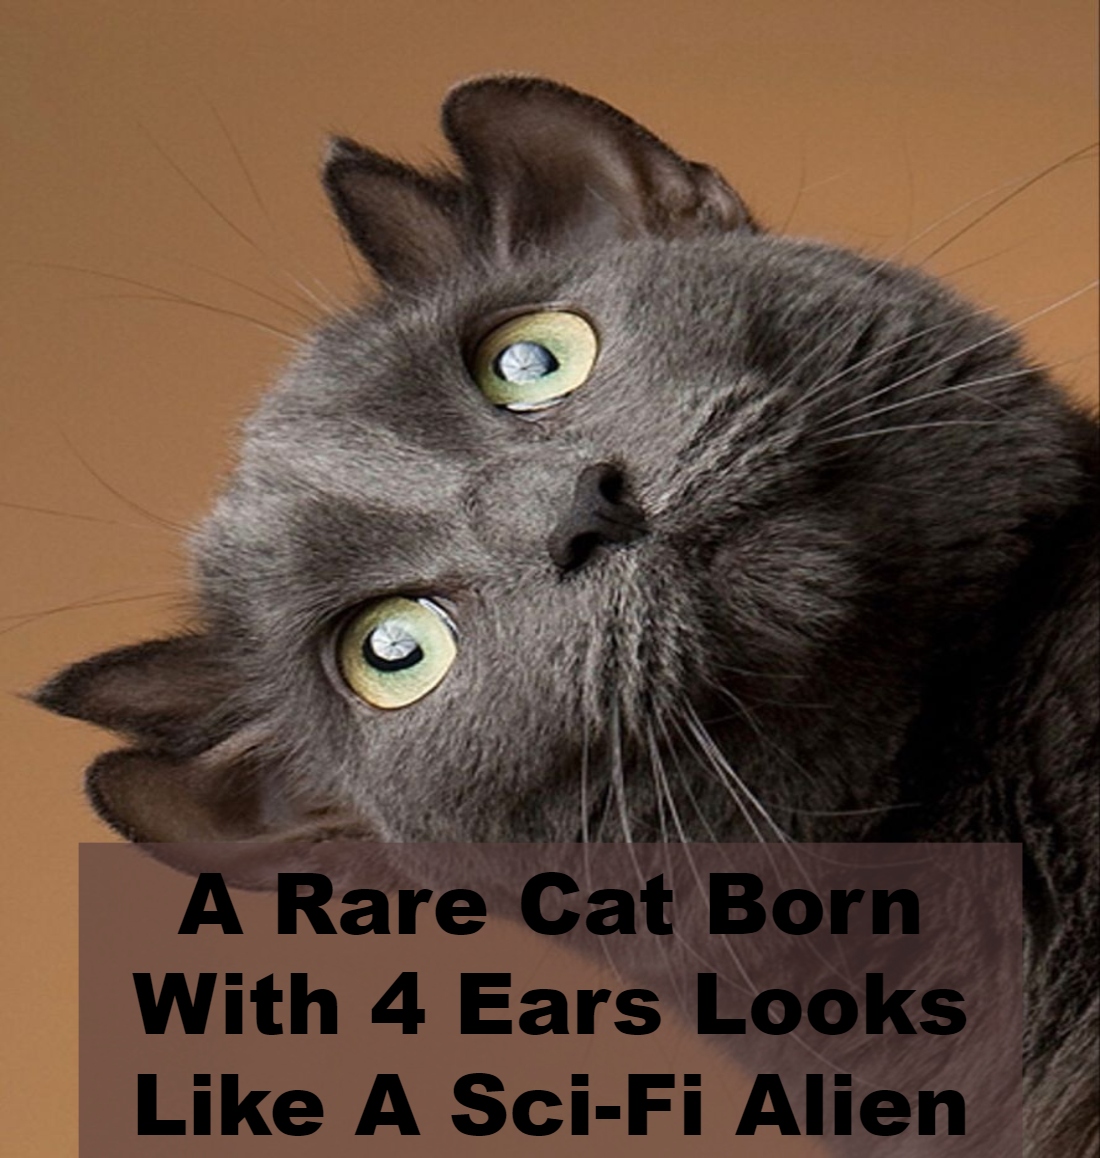 A Rare Cat Born With 4 Ears Looks Like A Sci-Fi Alien